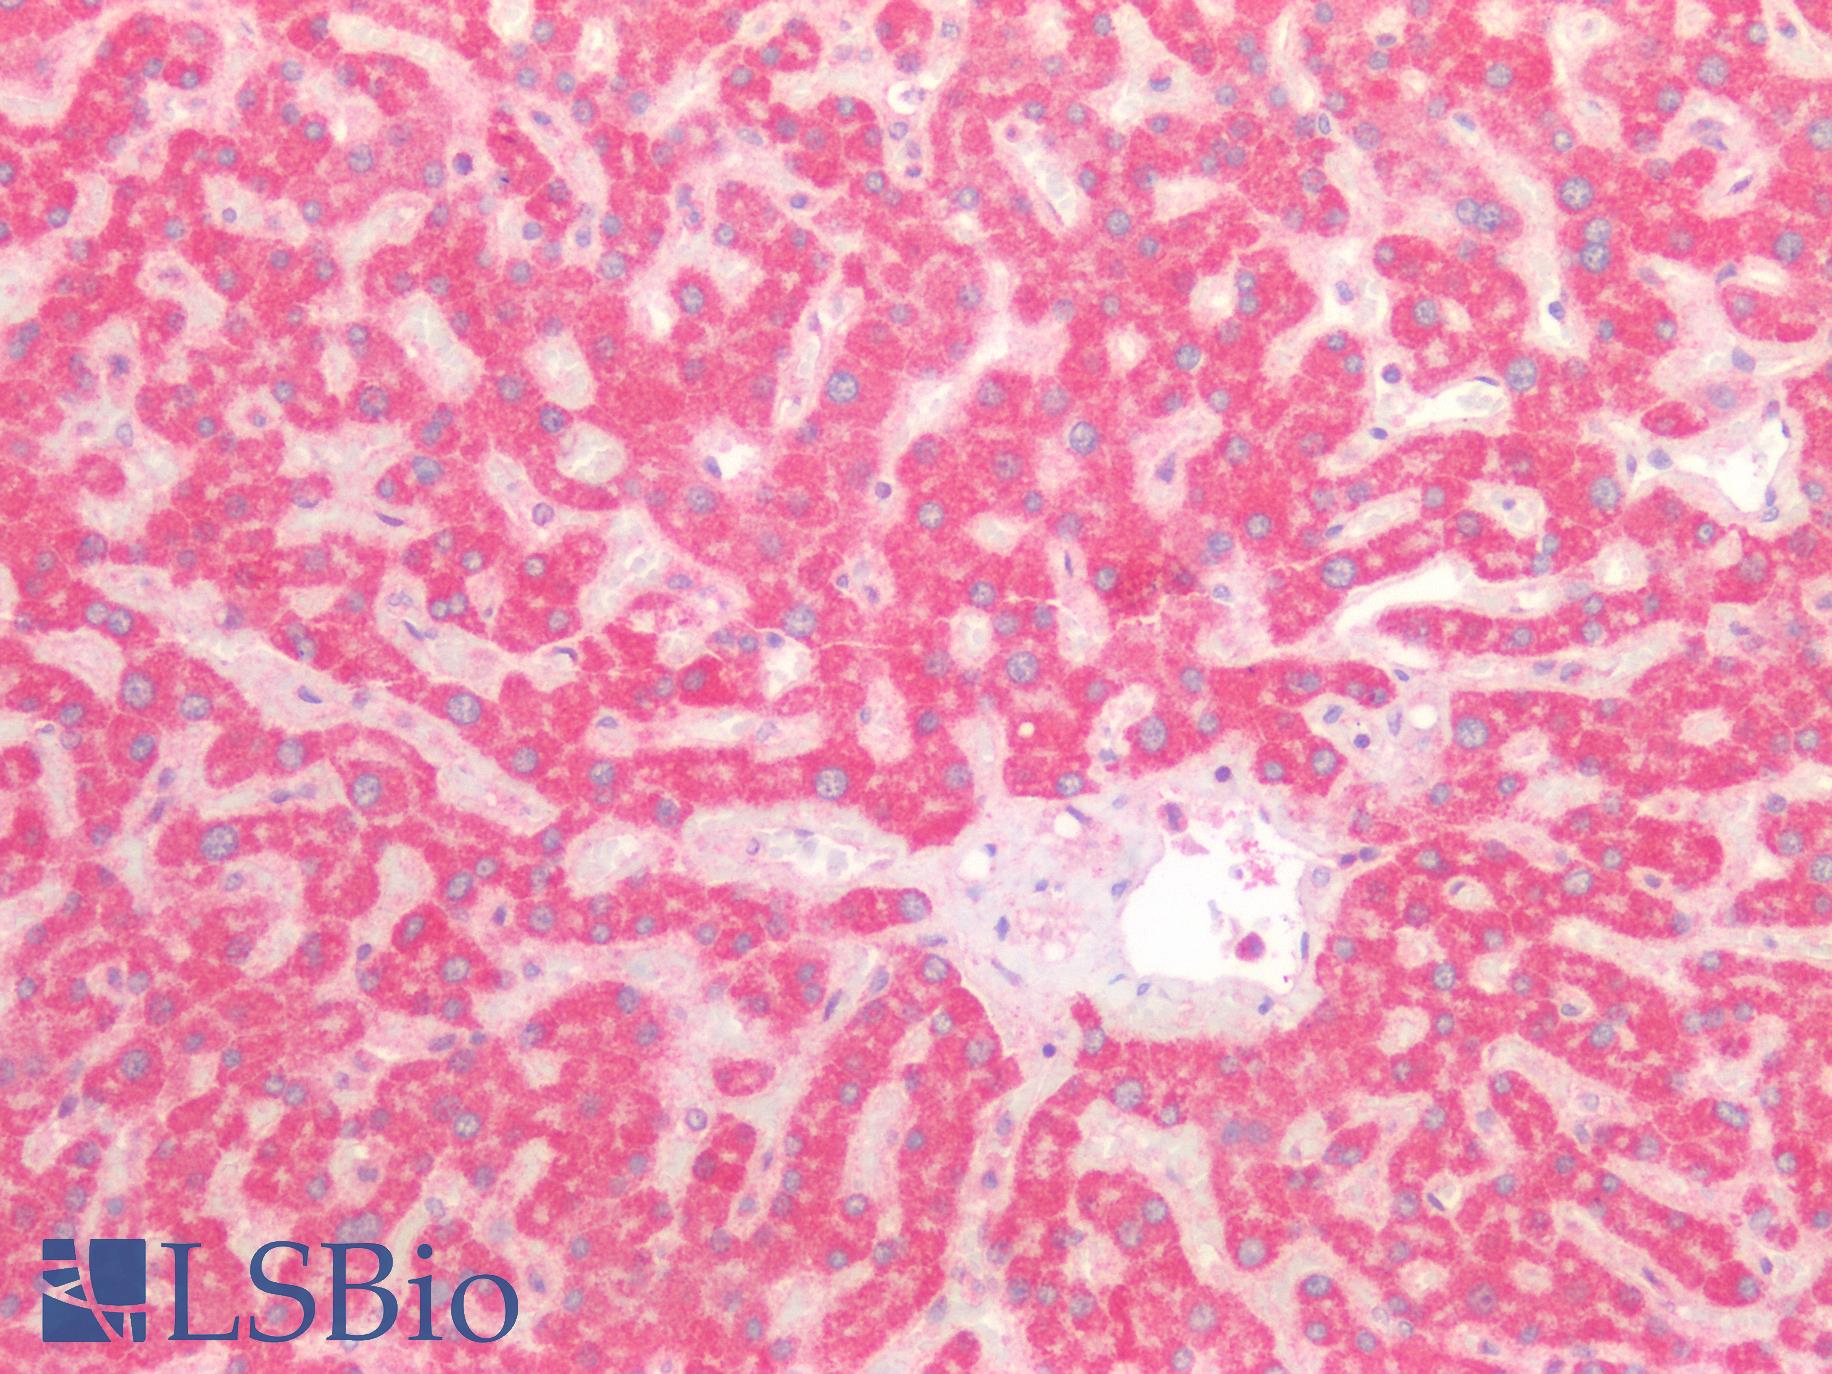 GNAQ Antibody - Human Liver: Formalin-Fixed, Paraffin-Embedded (FFPE)